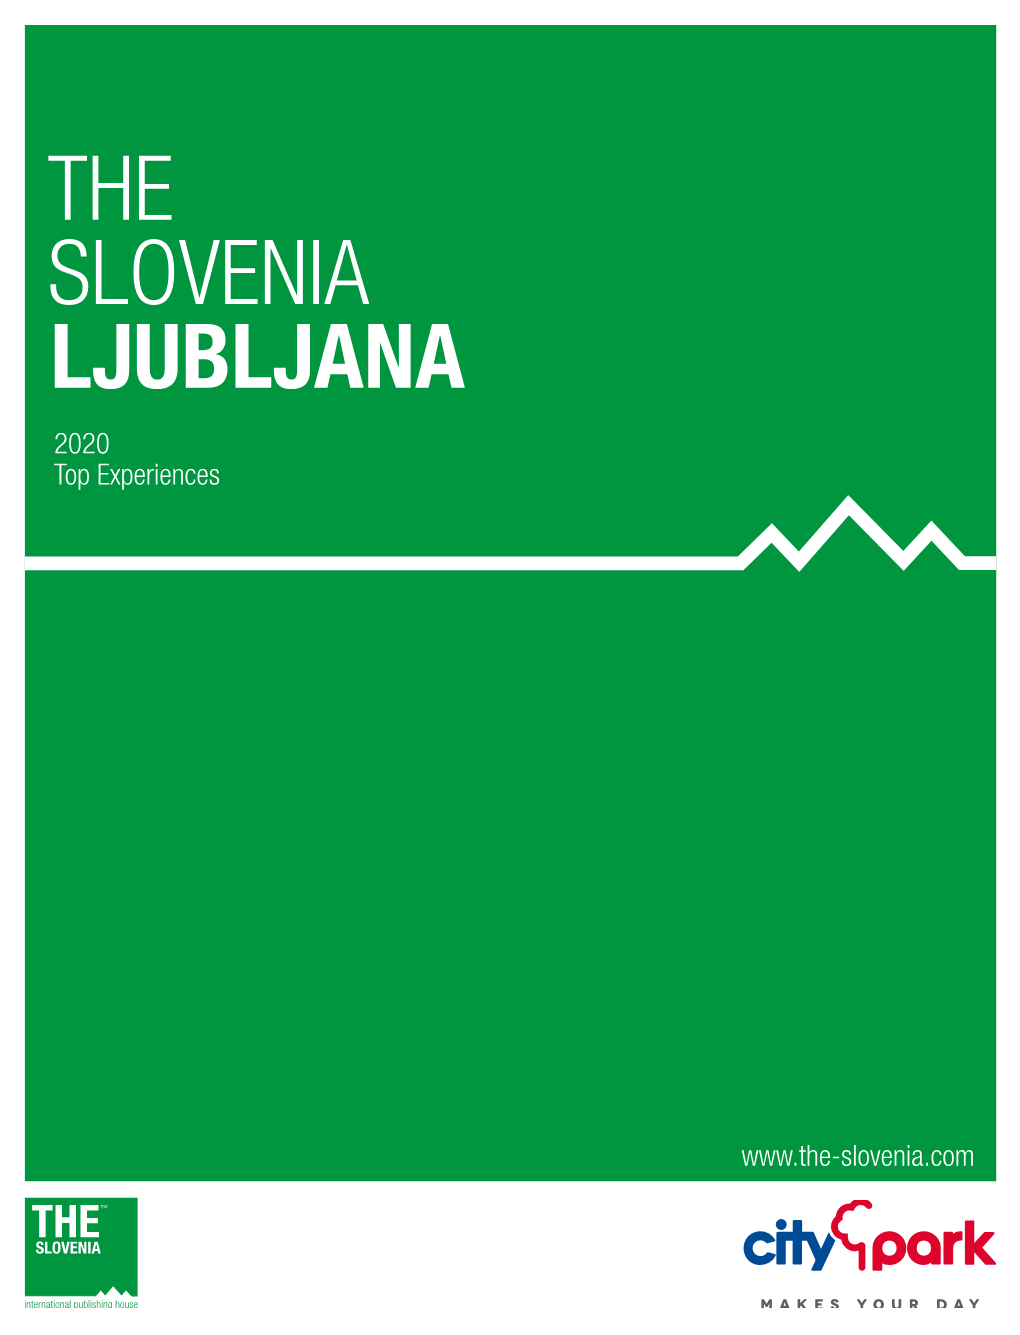 THE SLOVENIA LJUBLJANA 2020 Top Experiences